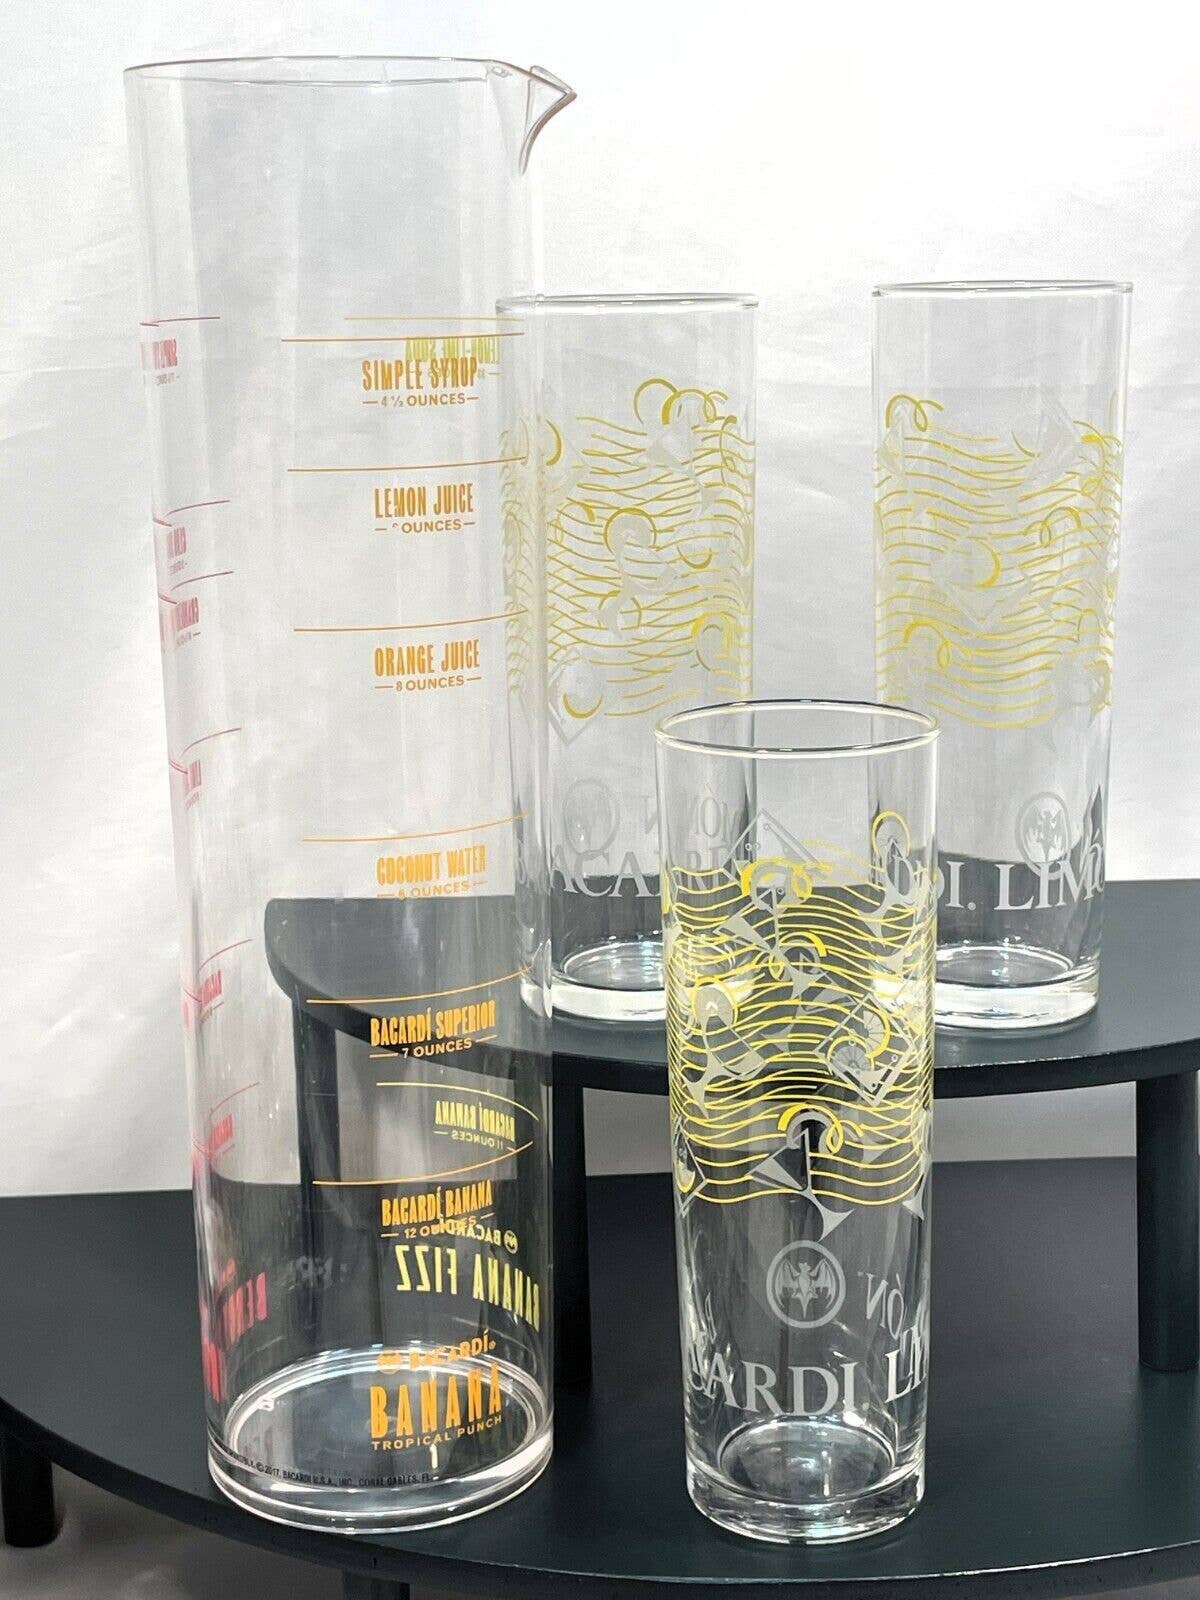 Bacardi Rum Highball Tall Glass Tumbler Set - Custom Pint Glasses - Set Of 6